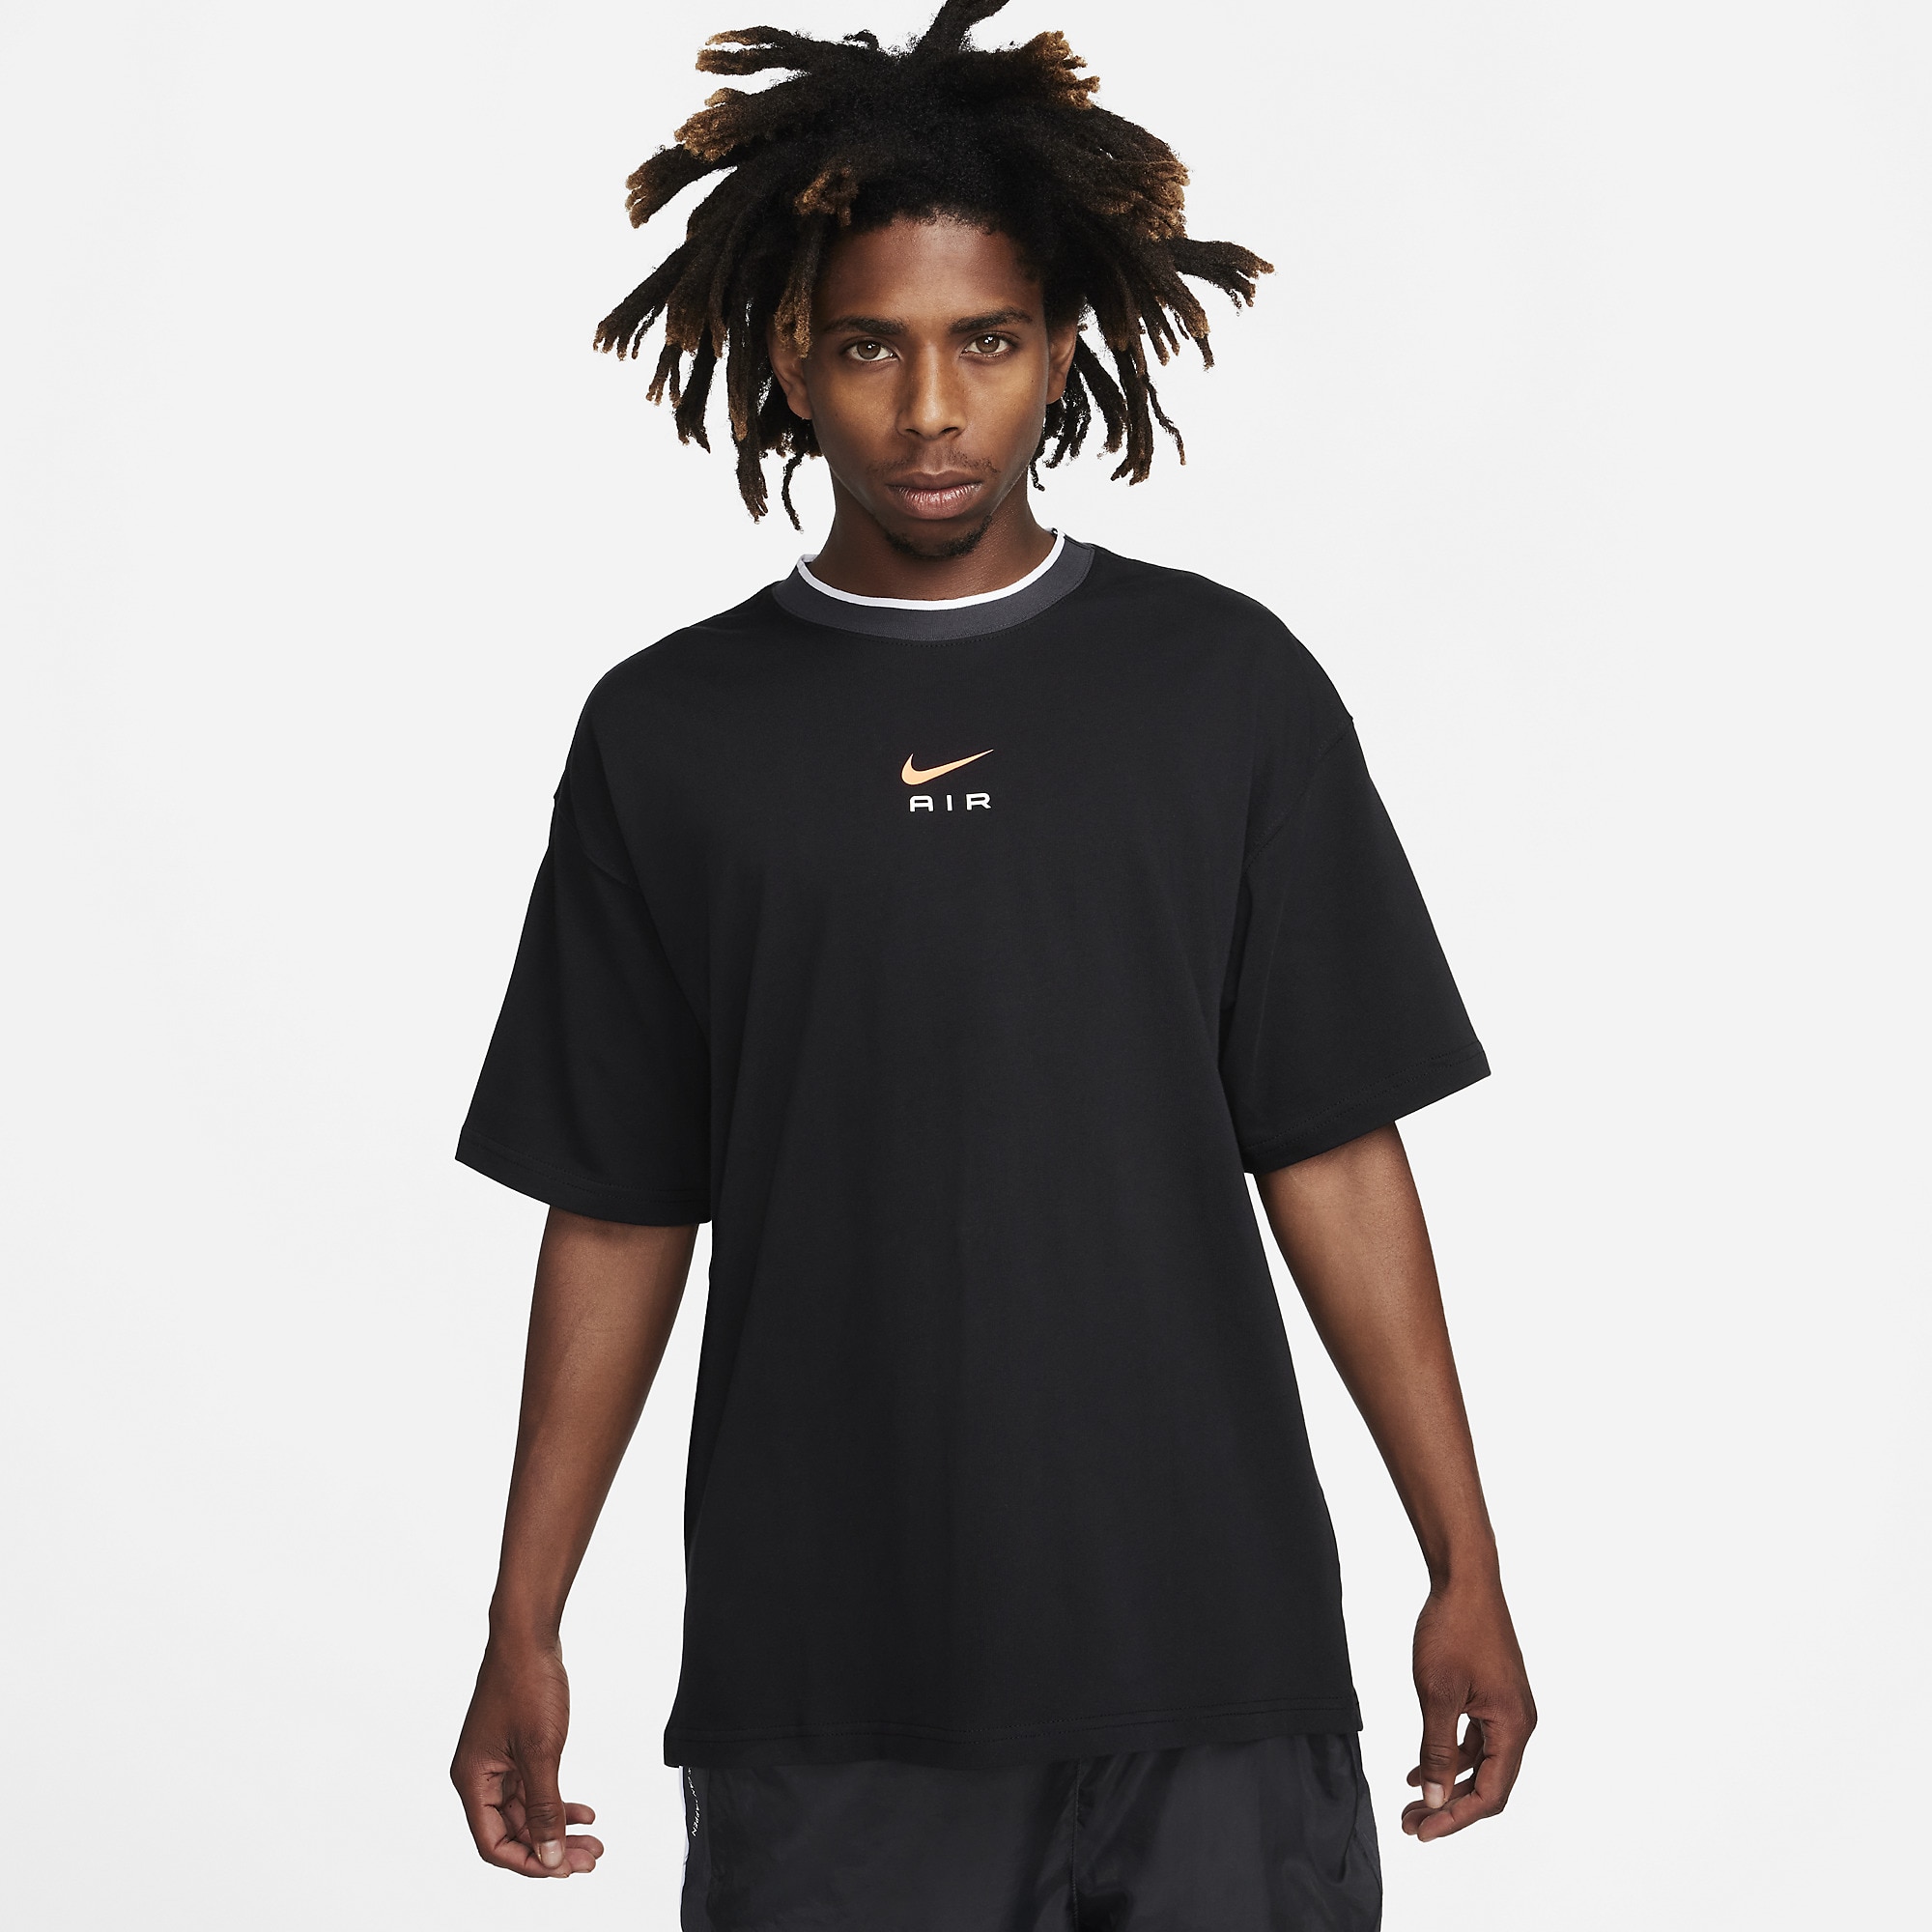 Nike Sportswear Air x Marcus Rashford Large Fit T-Shirt - Black - Tops ...